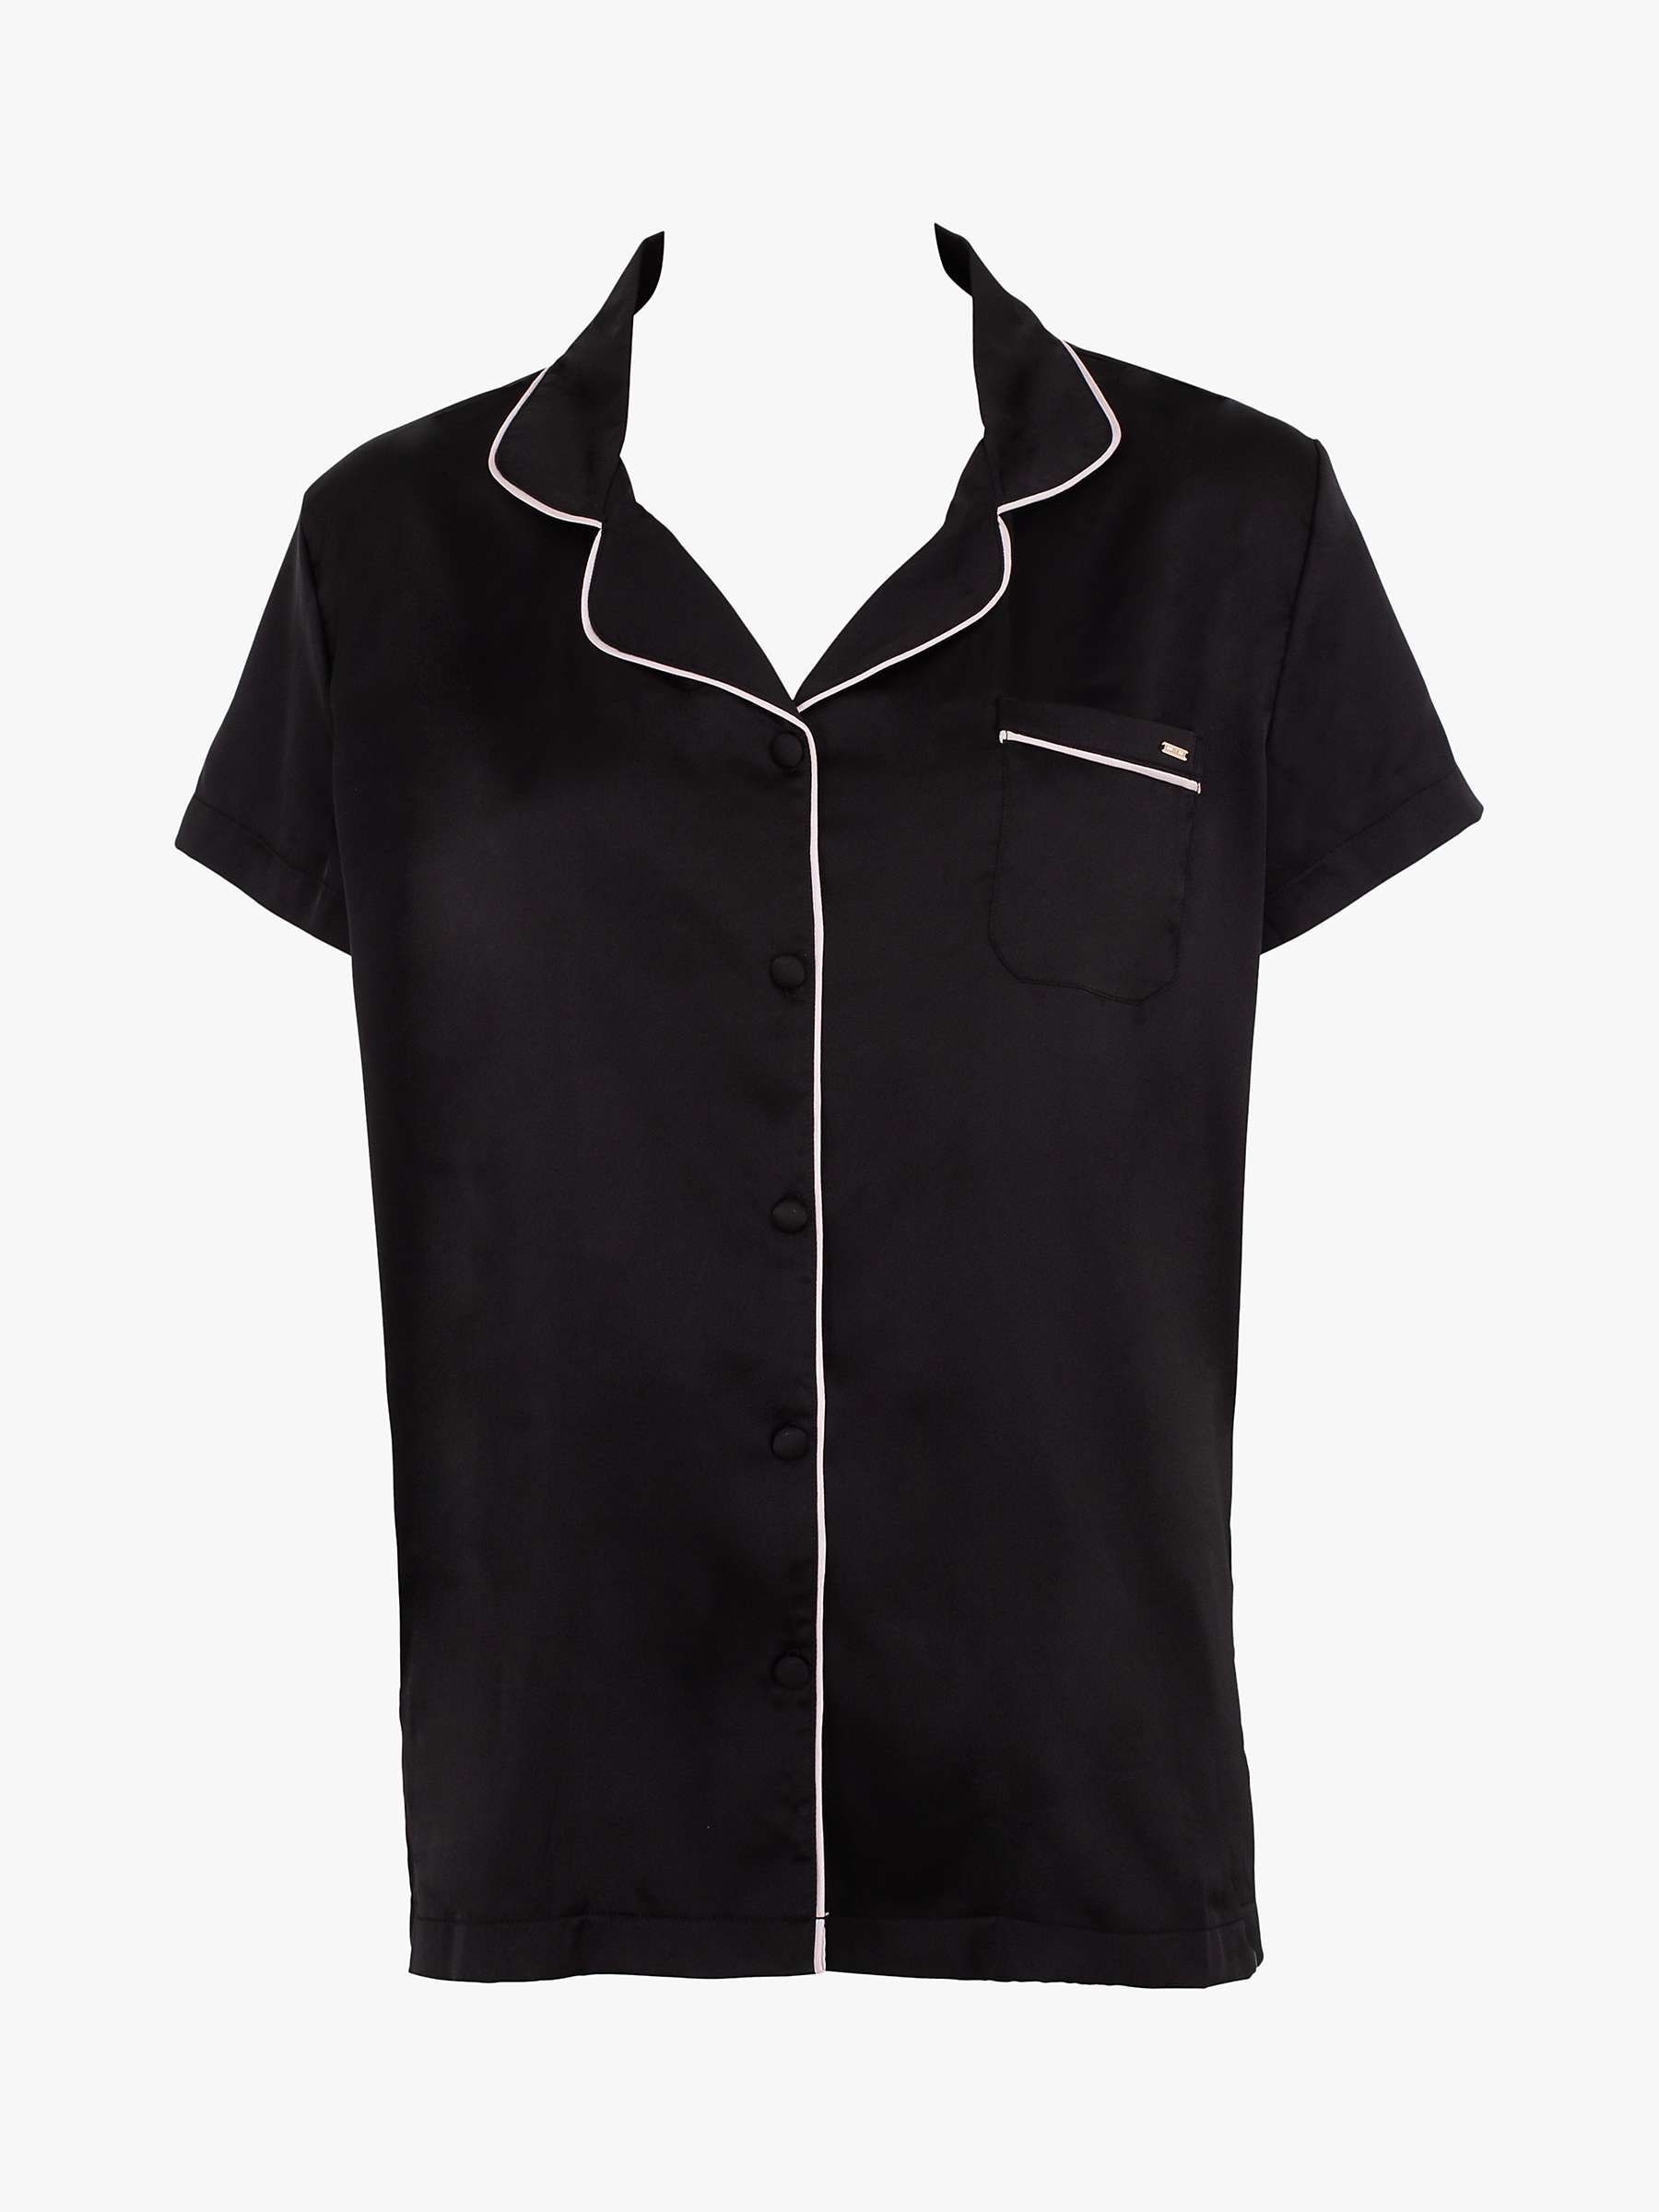 Buy Bluebella Abigail Shirt and Shorts Pyjama Set, Black Online at johnlewis.com